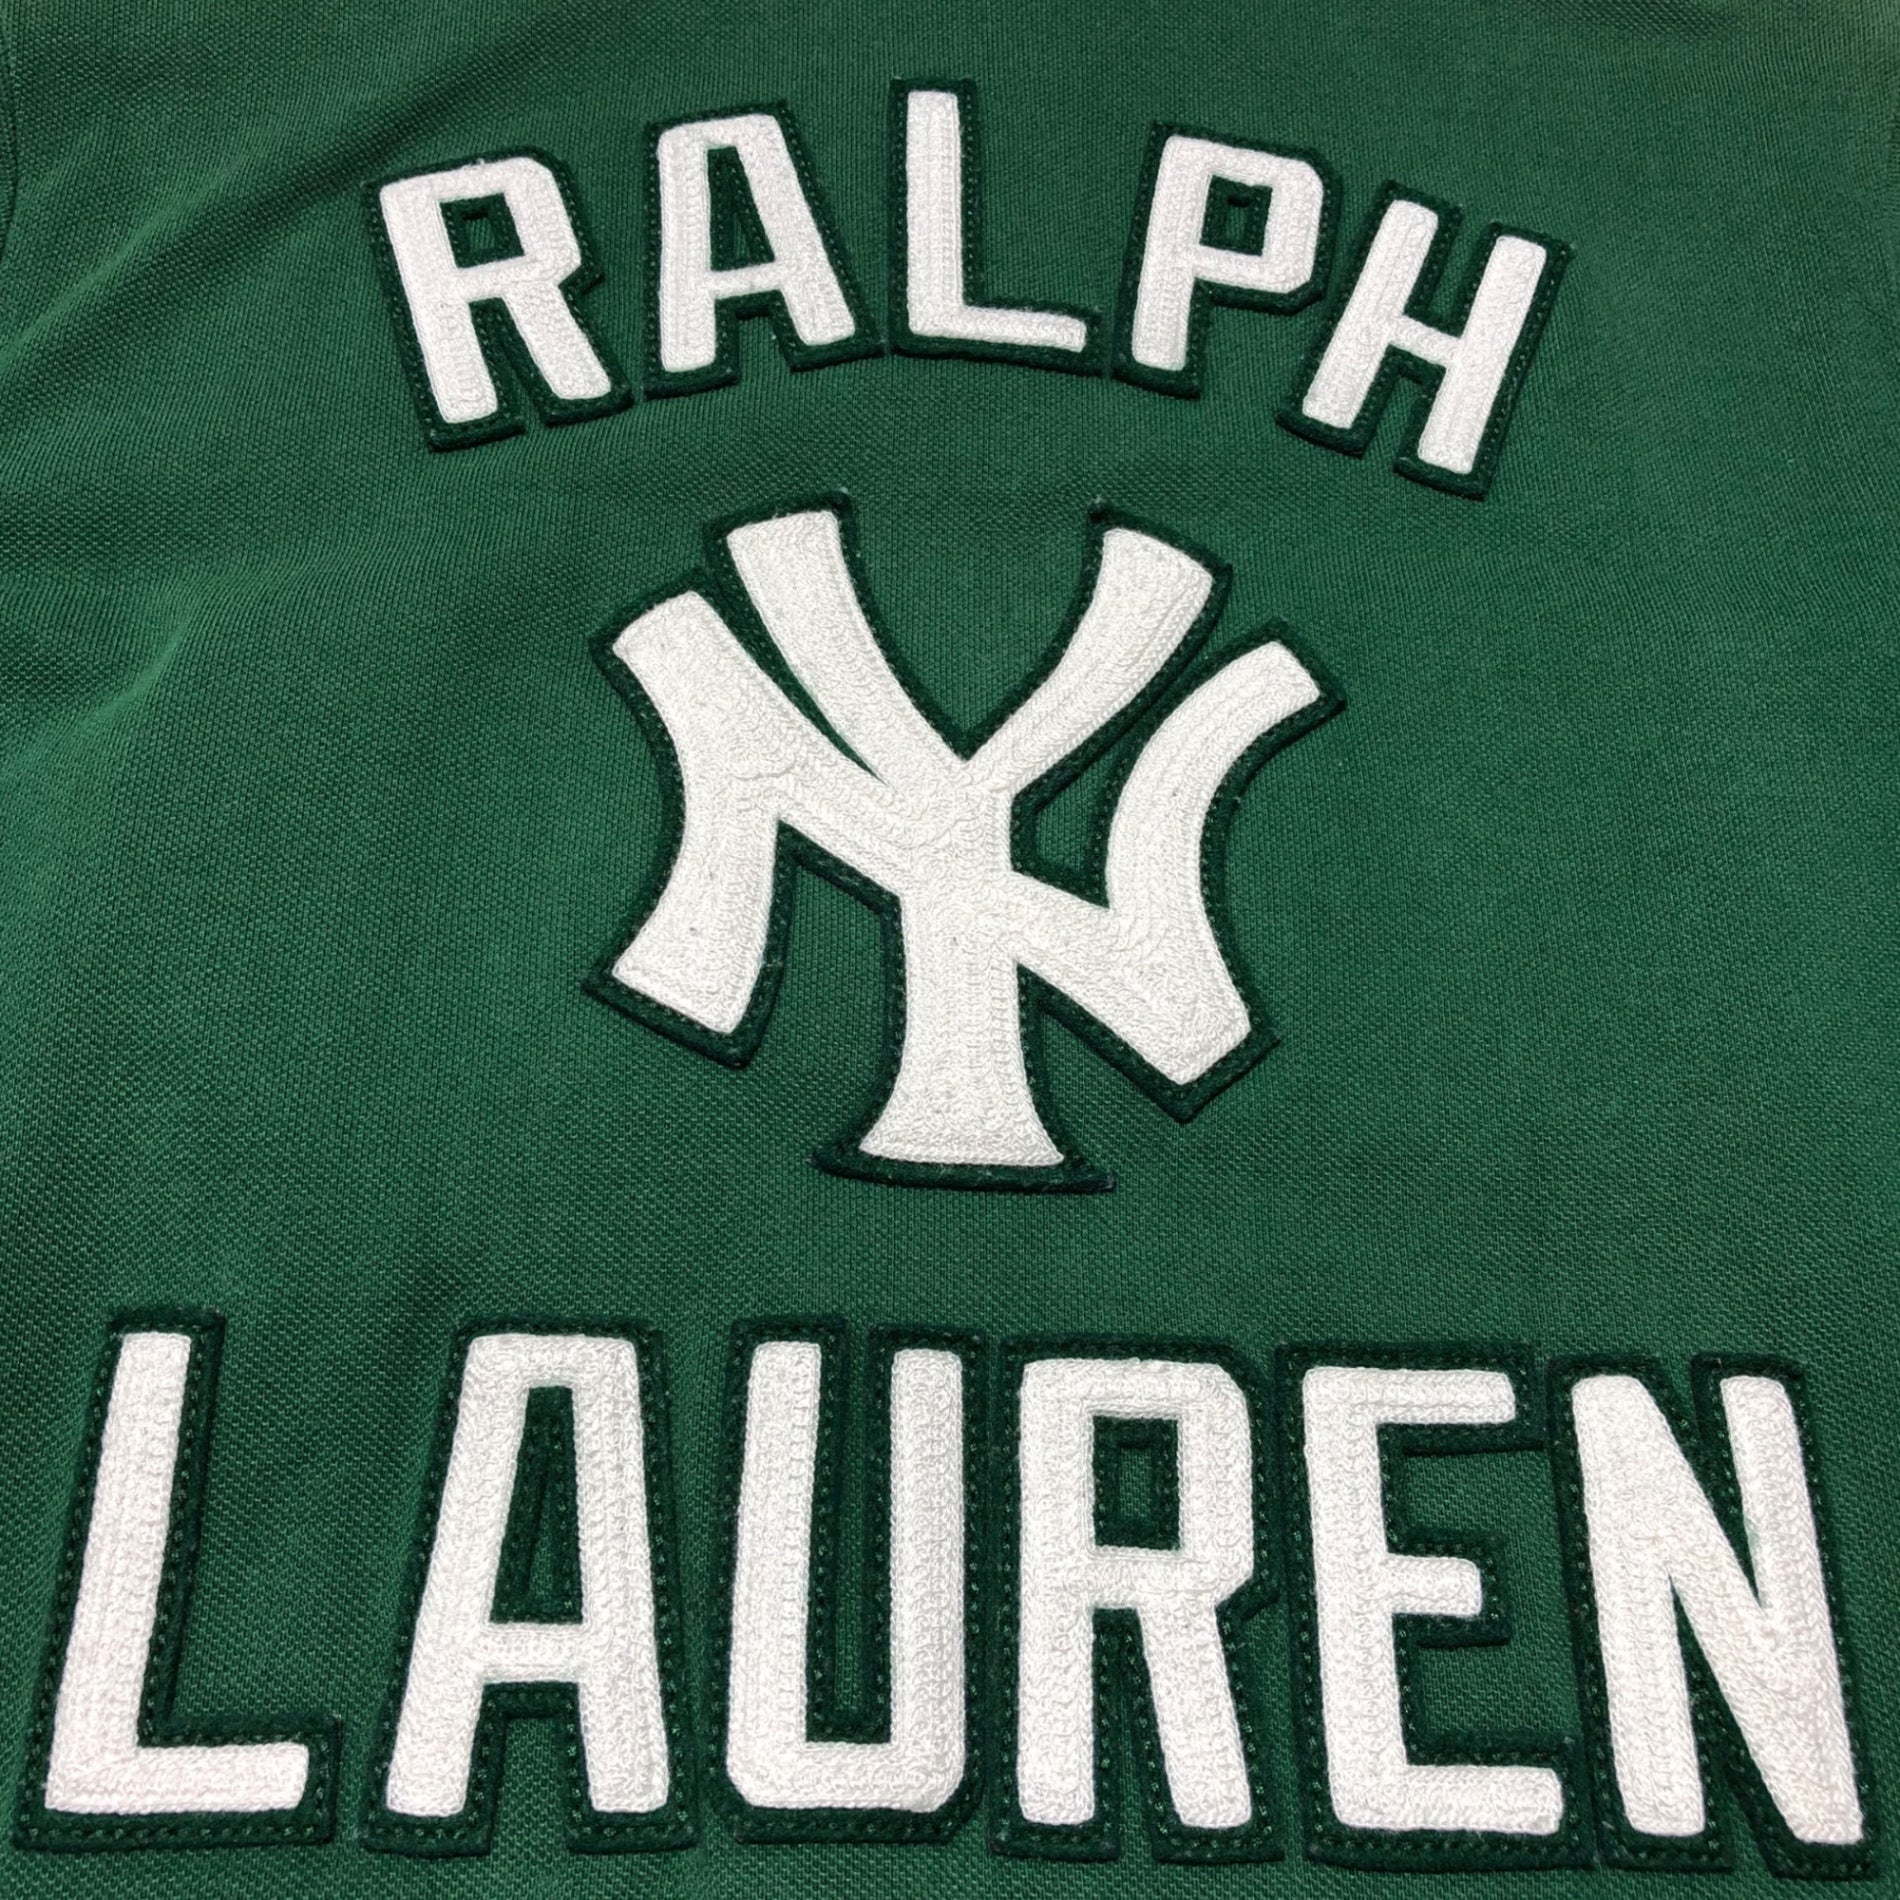 POLO RALPH LAUREN×MLB Yankees(ポロラルフローレン×ヤンキース) Yankees  logo embroidery polo shirt ロゴ 刺繍 半袖 ポロシャツ 710810495001 XS グリーン×ホワイト コラボ